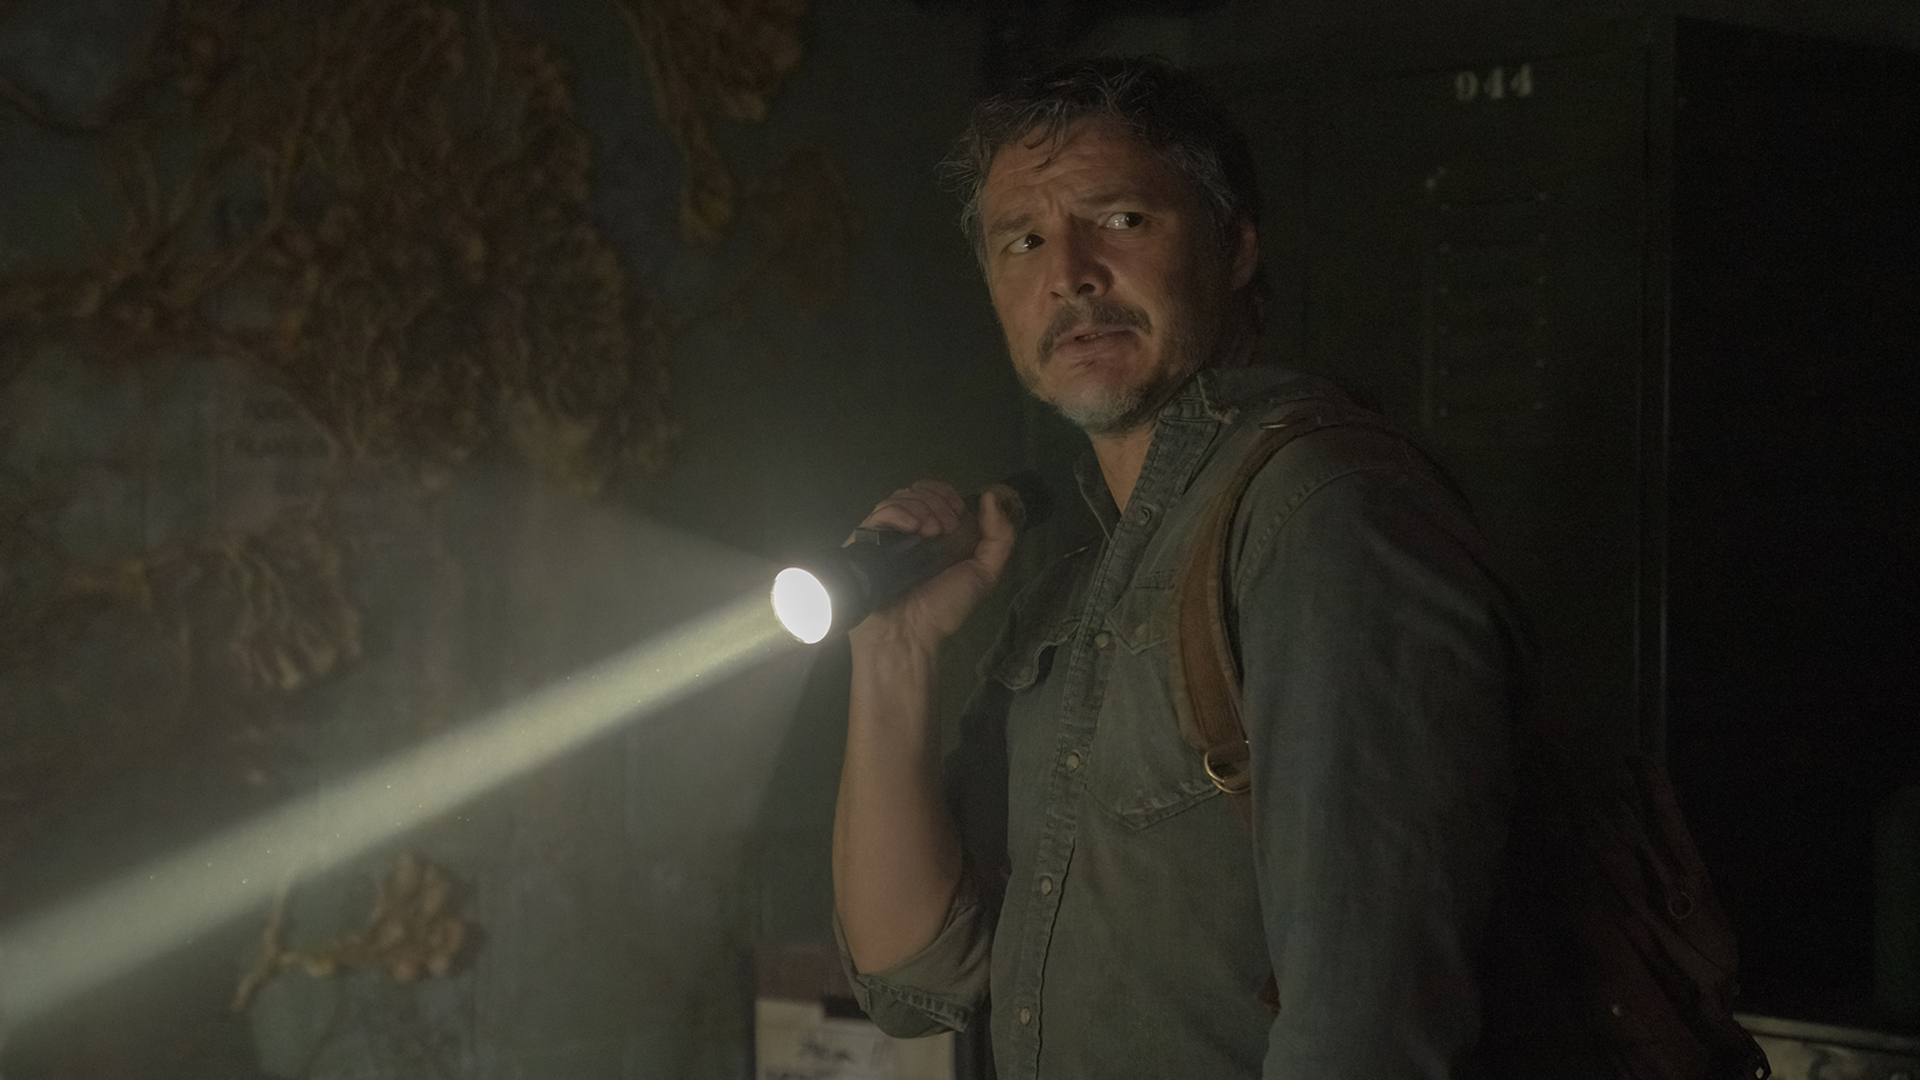 Joel shines a flashlight in a dark room in The Last of Us season 1